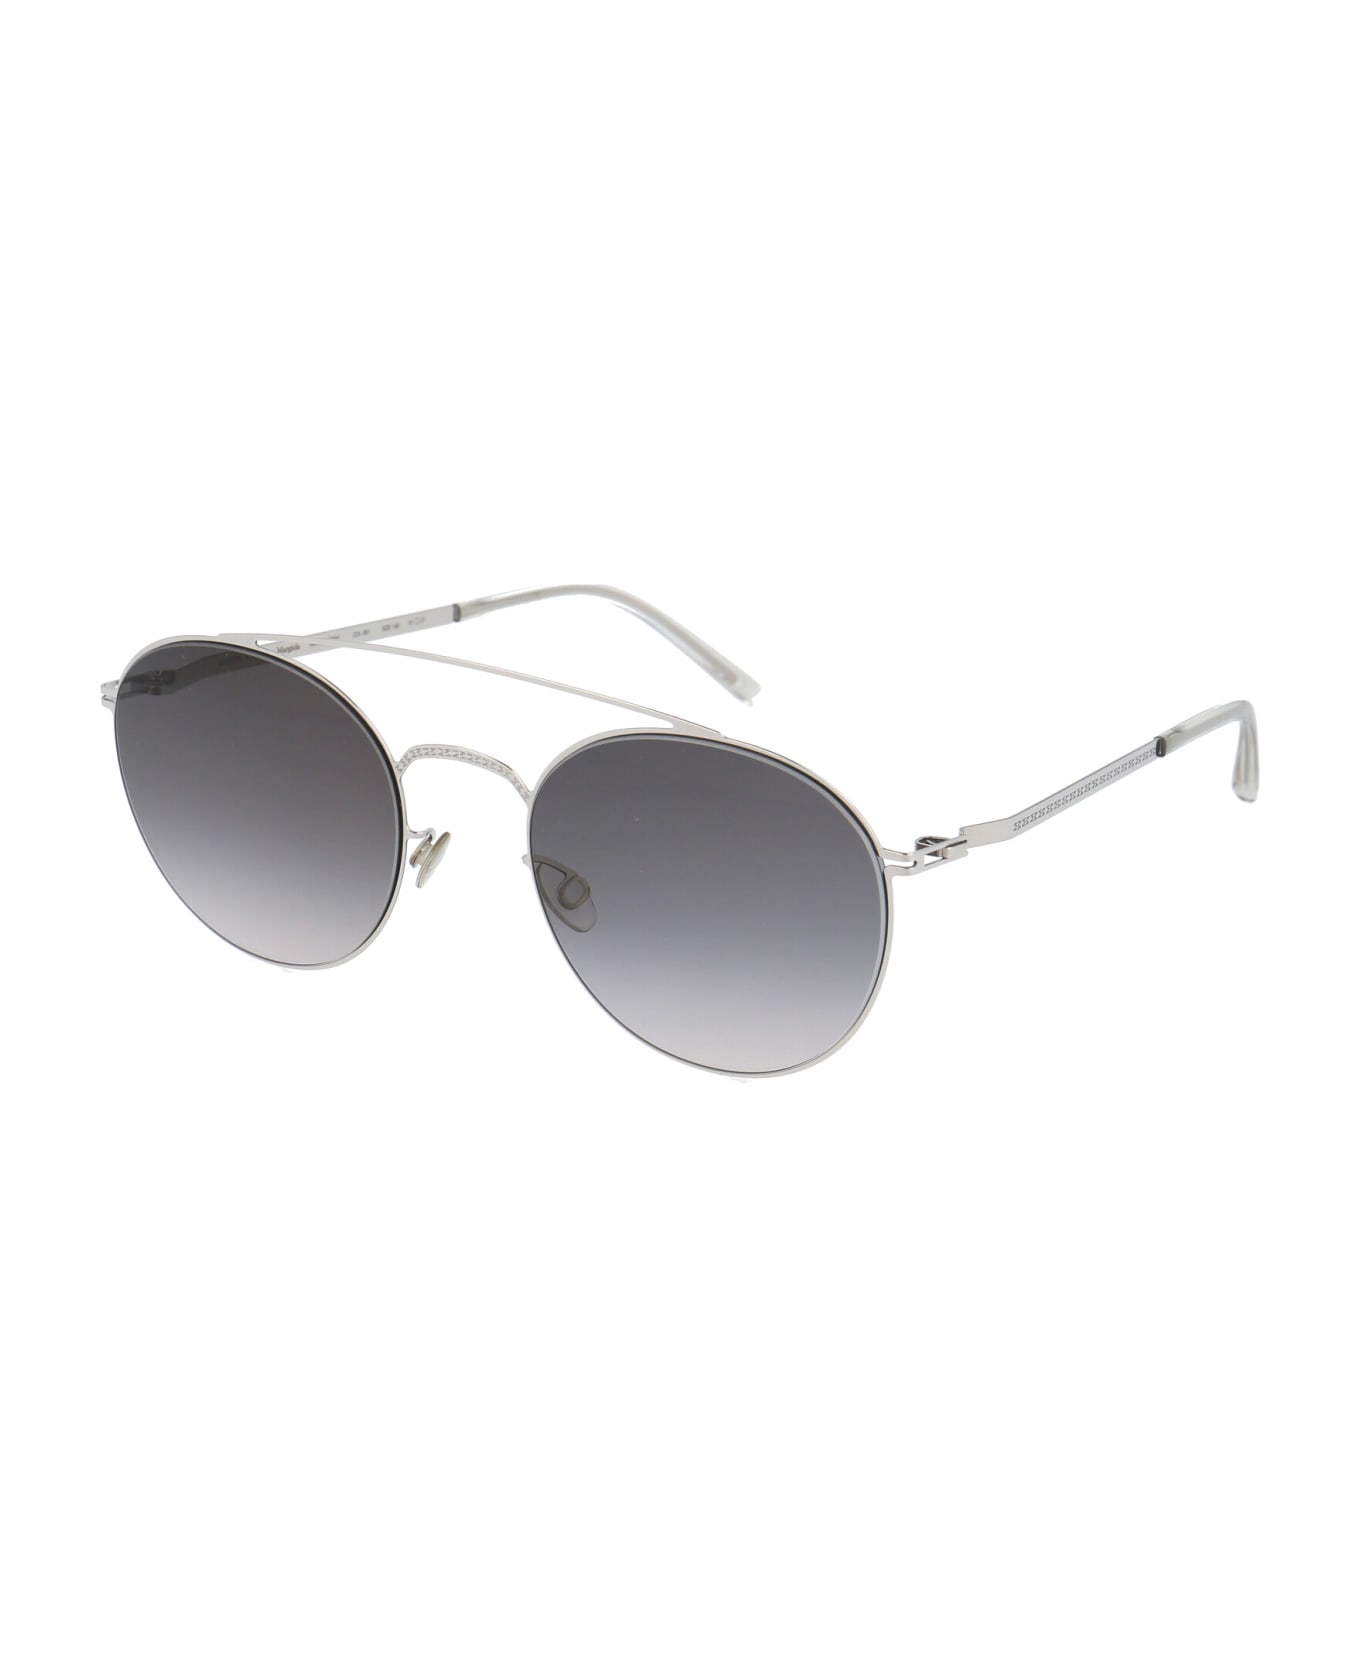 Mykita Mmcraft007 Sunglasses - 051 SHINYSILVER | GREY GRADIENT